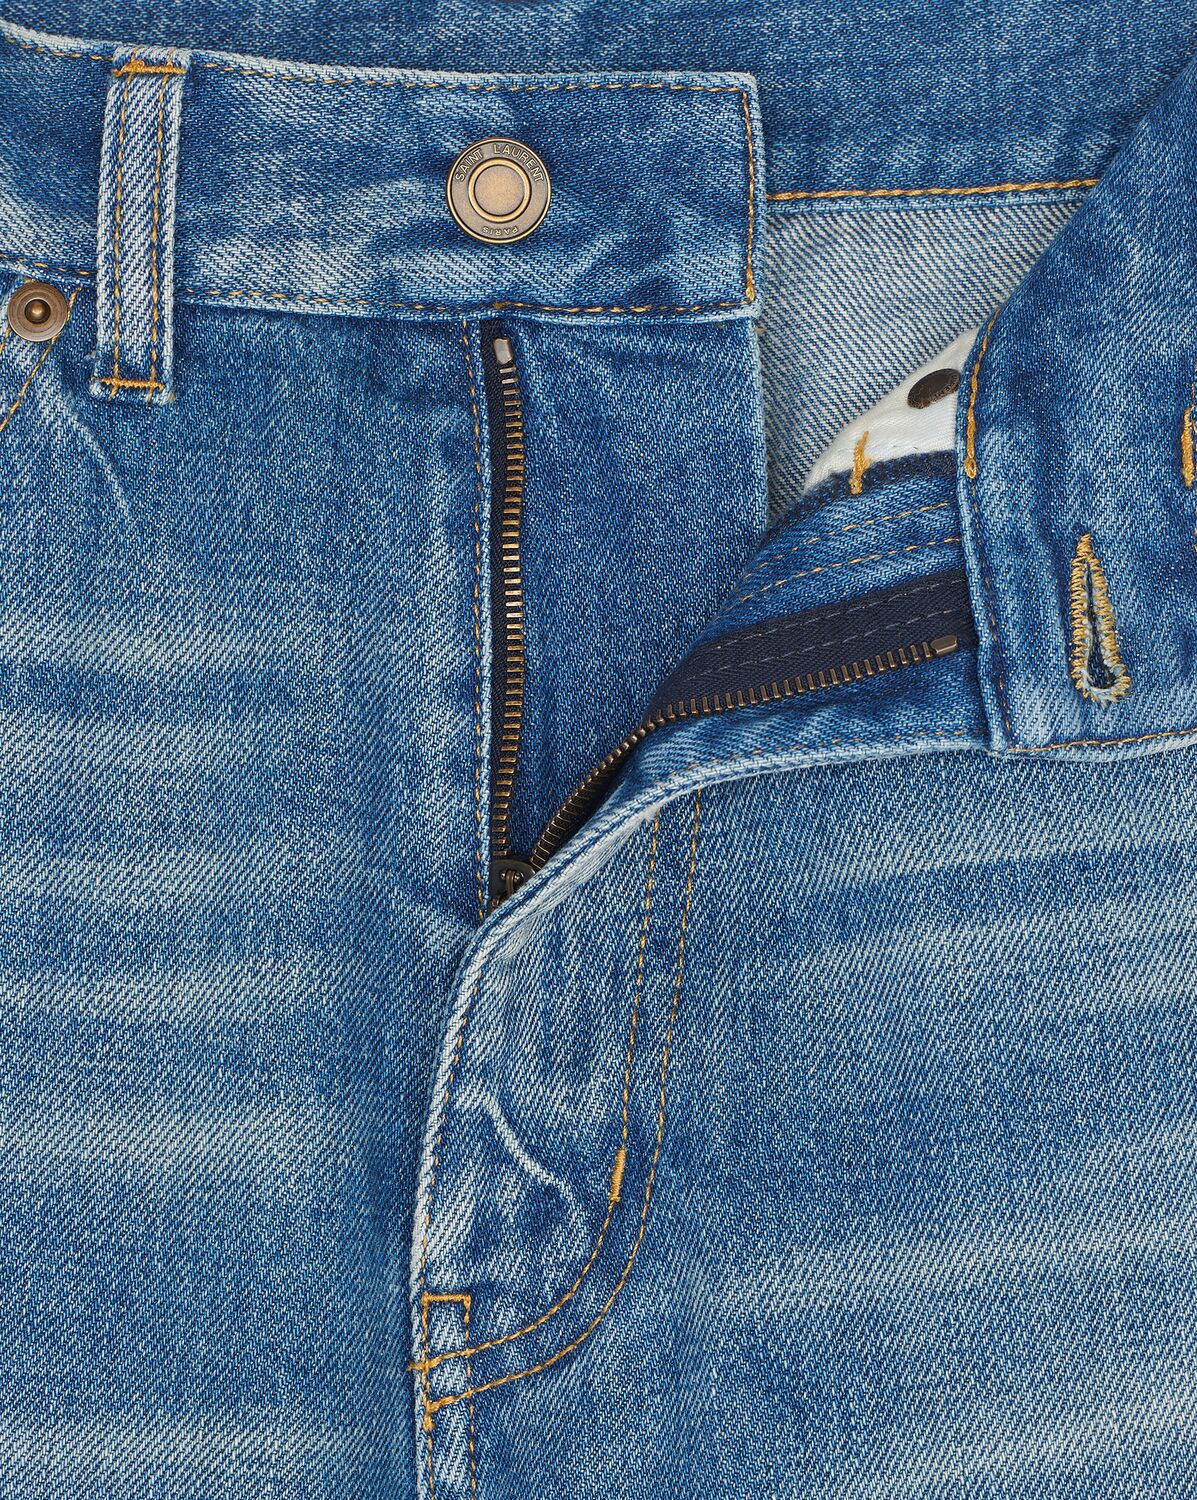 Clyde jeans in long beach blue denim | Saint Laurent | YSL.com